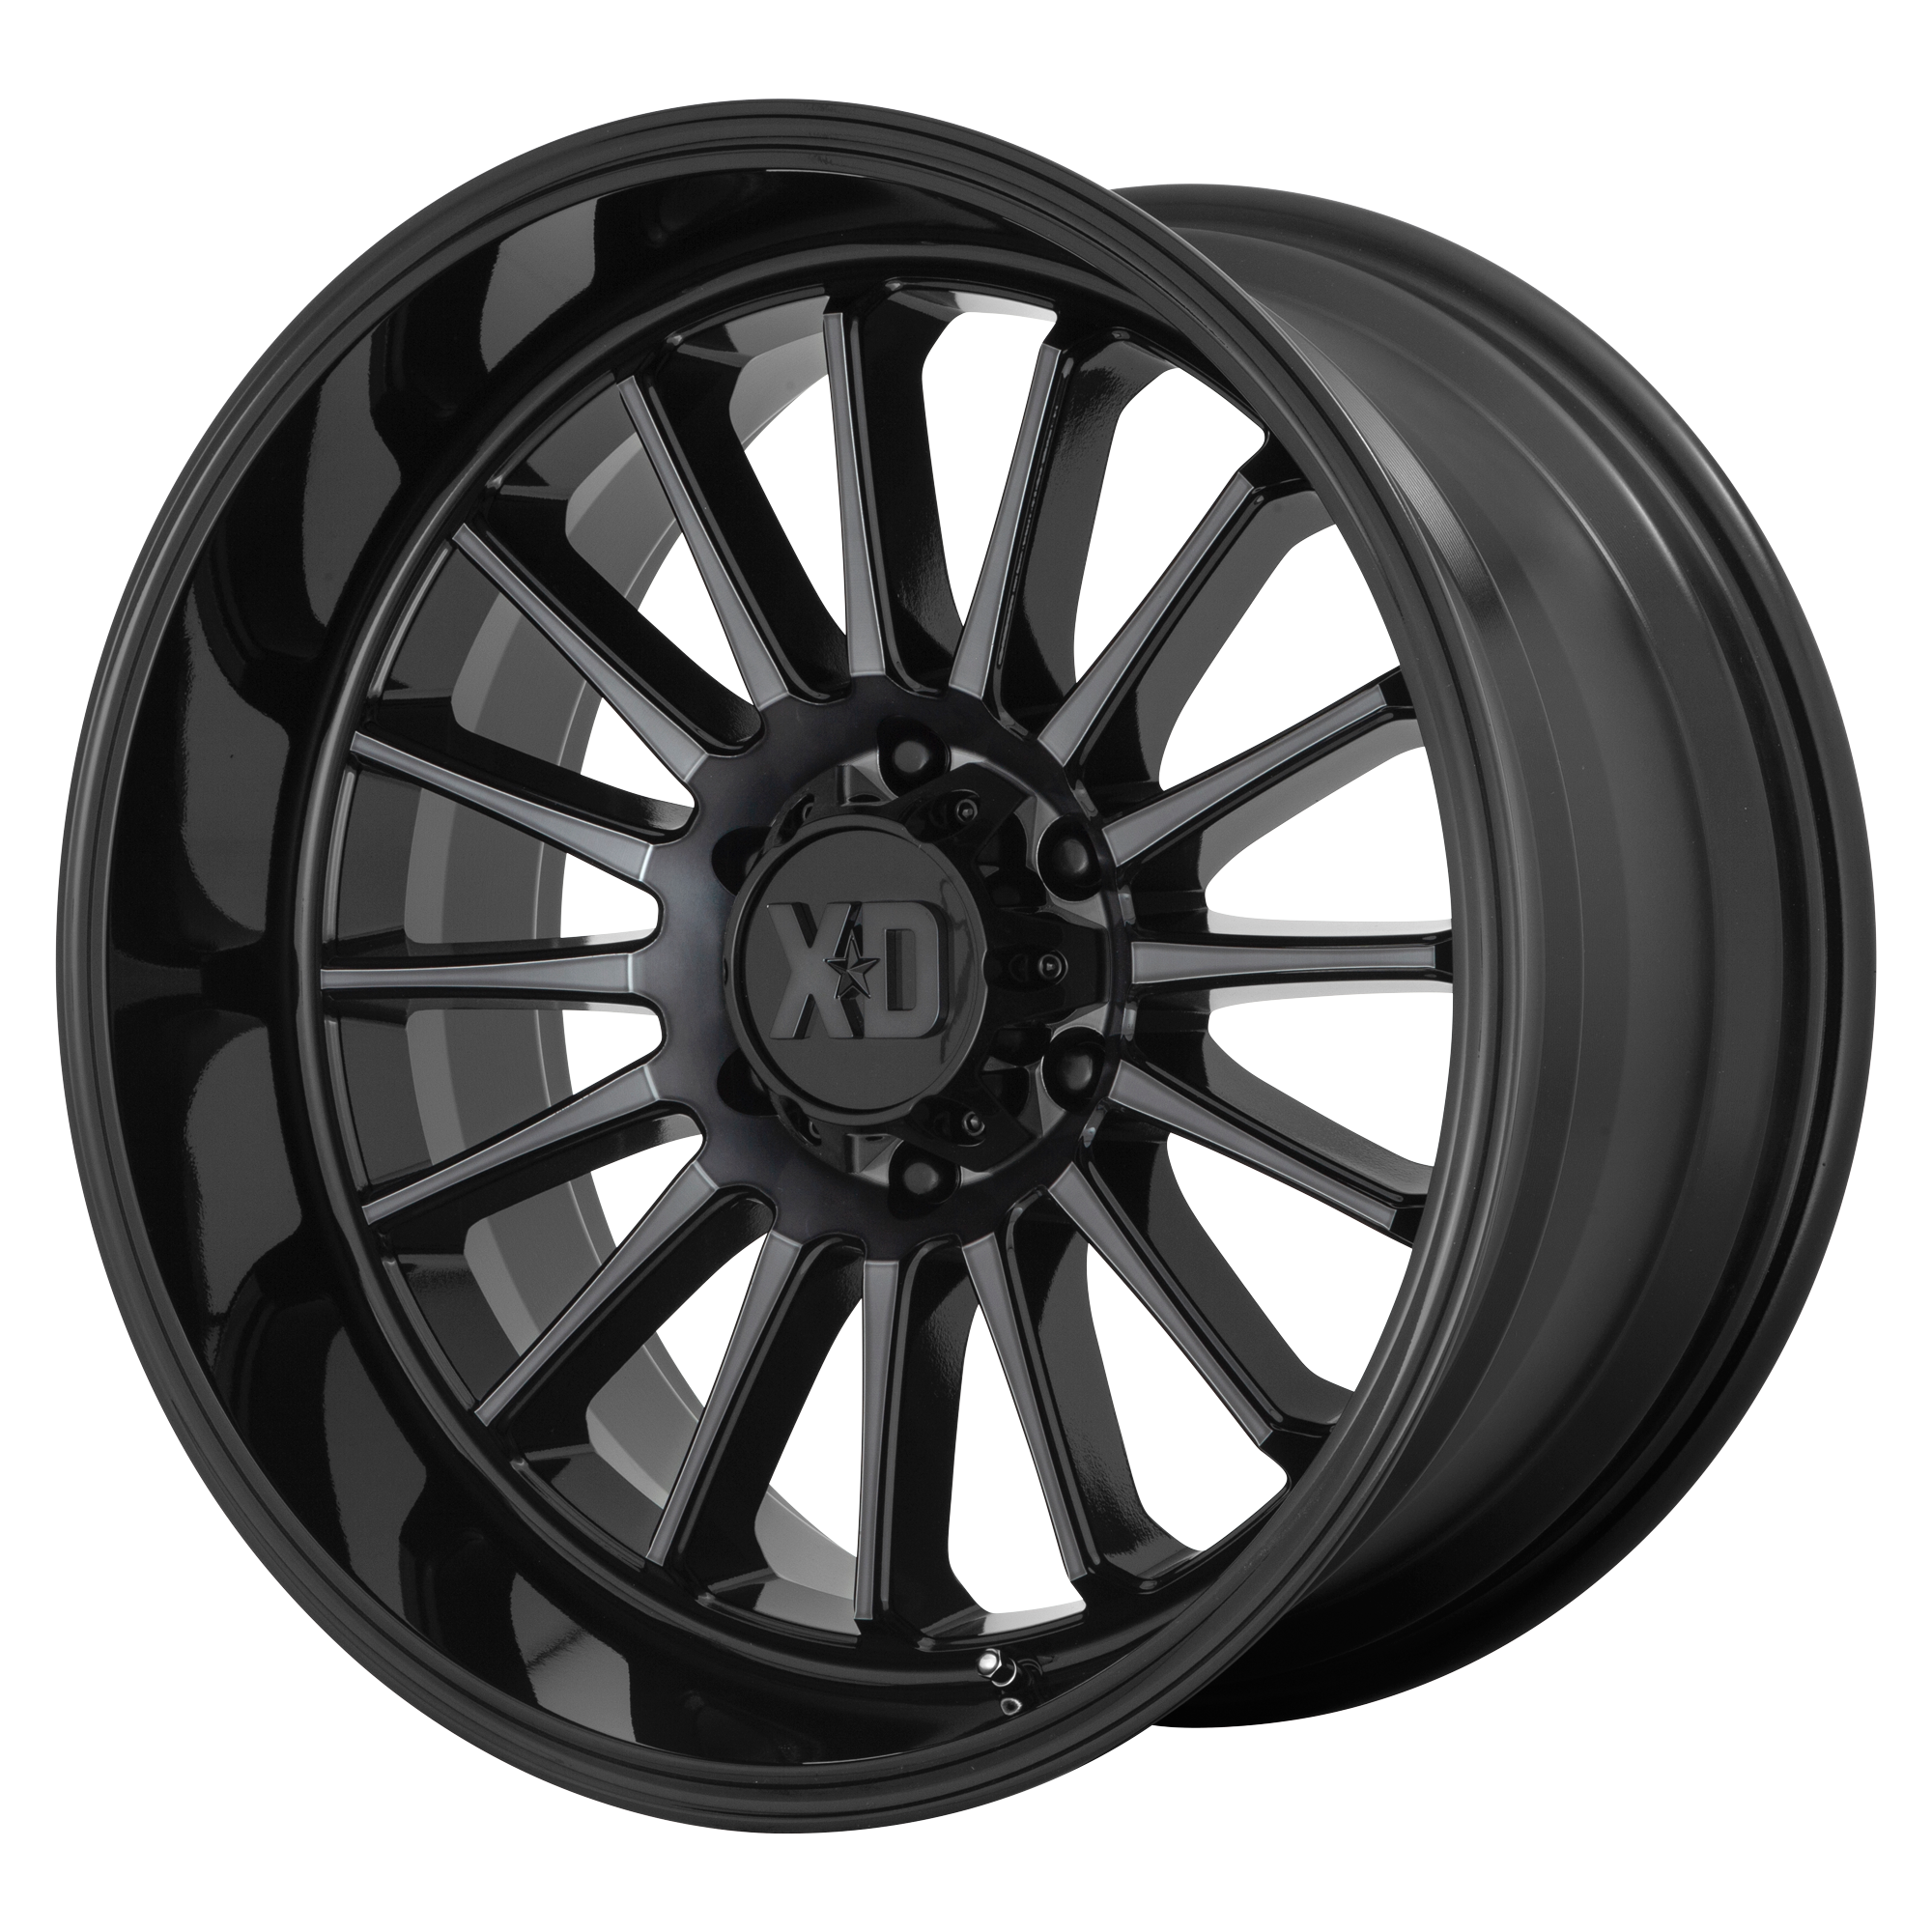 XD 20"x10" Non-Chrome Gloss Black With Gray Tint Custom Wheel ARSWCWXD85721087418N